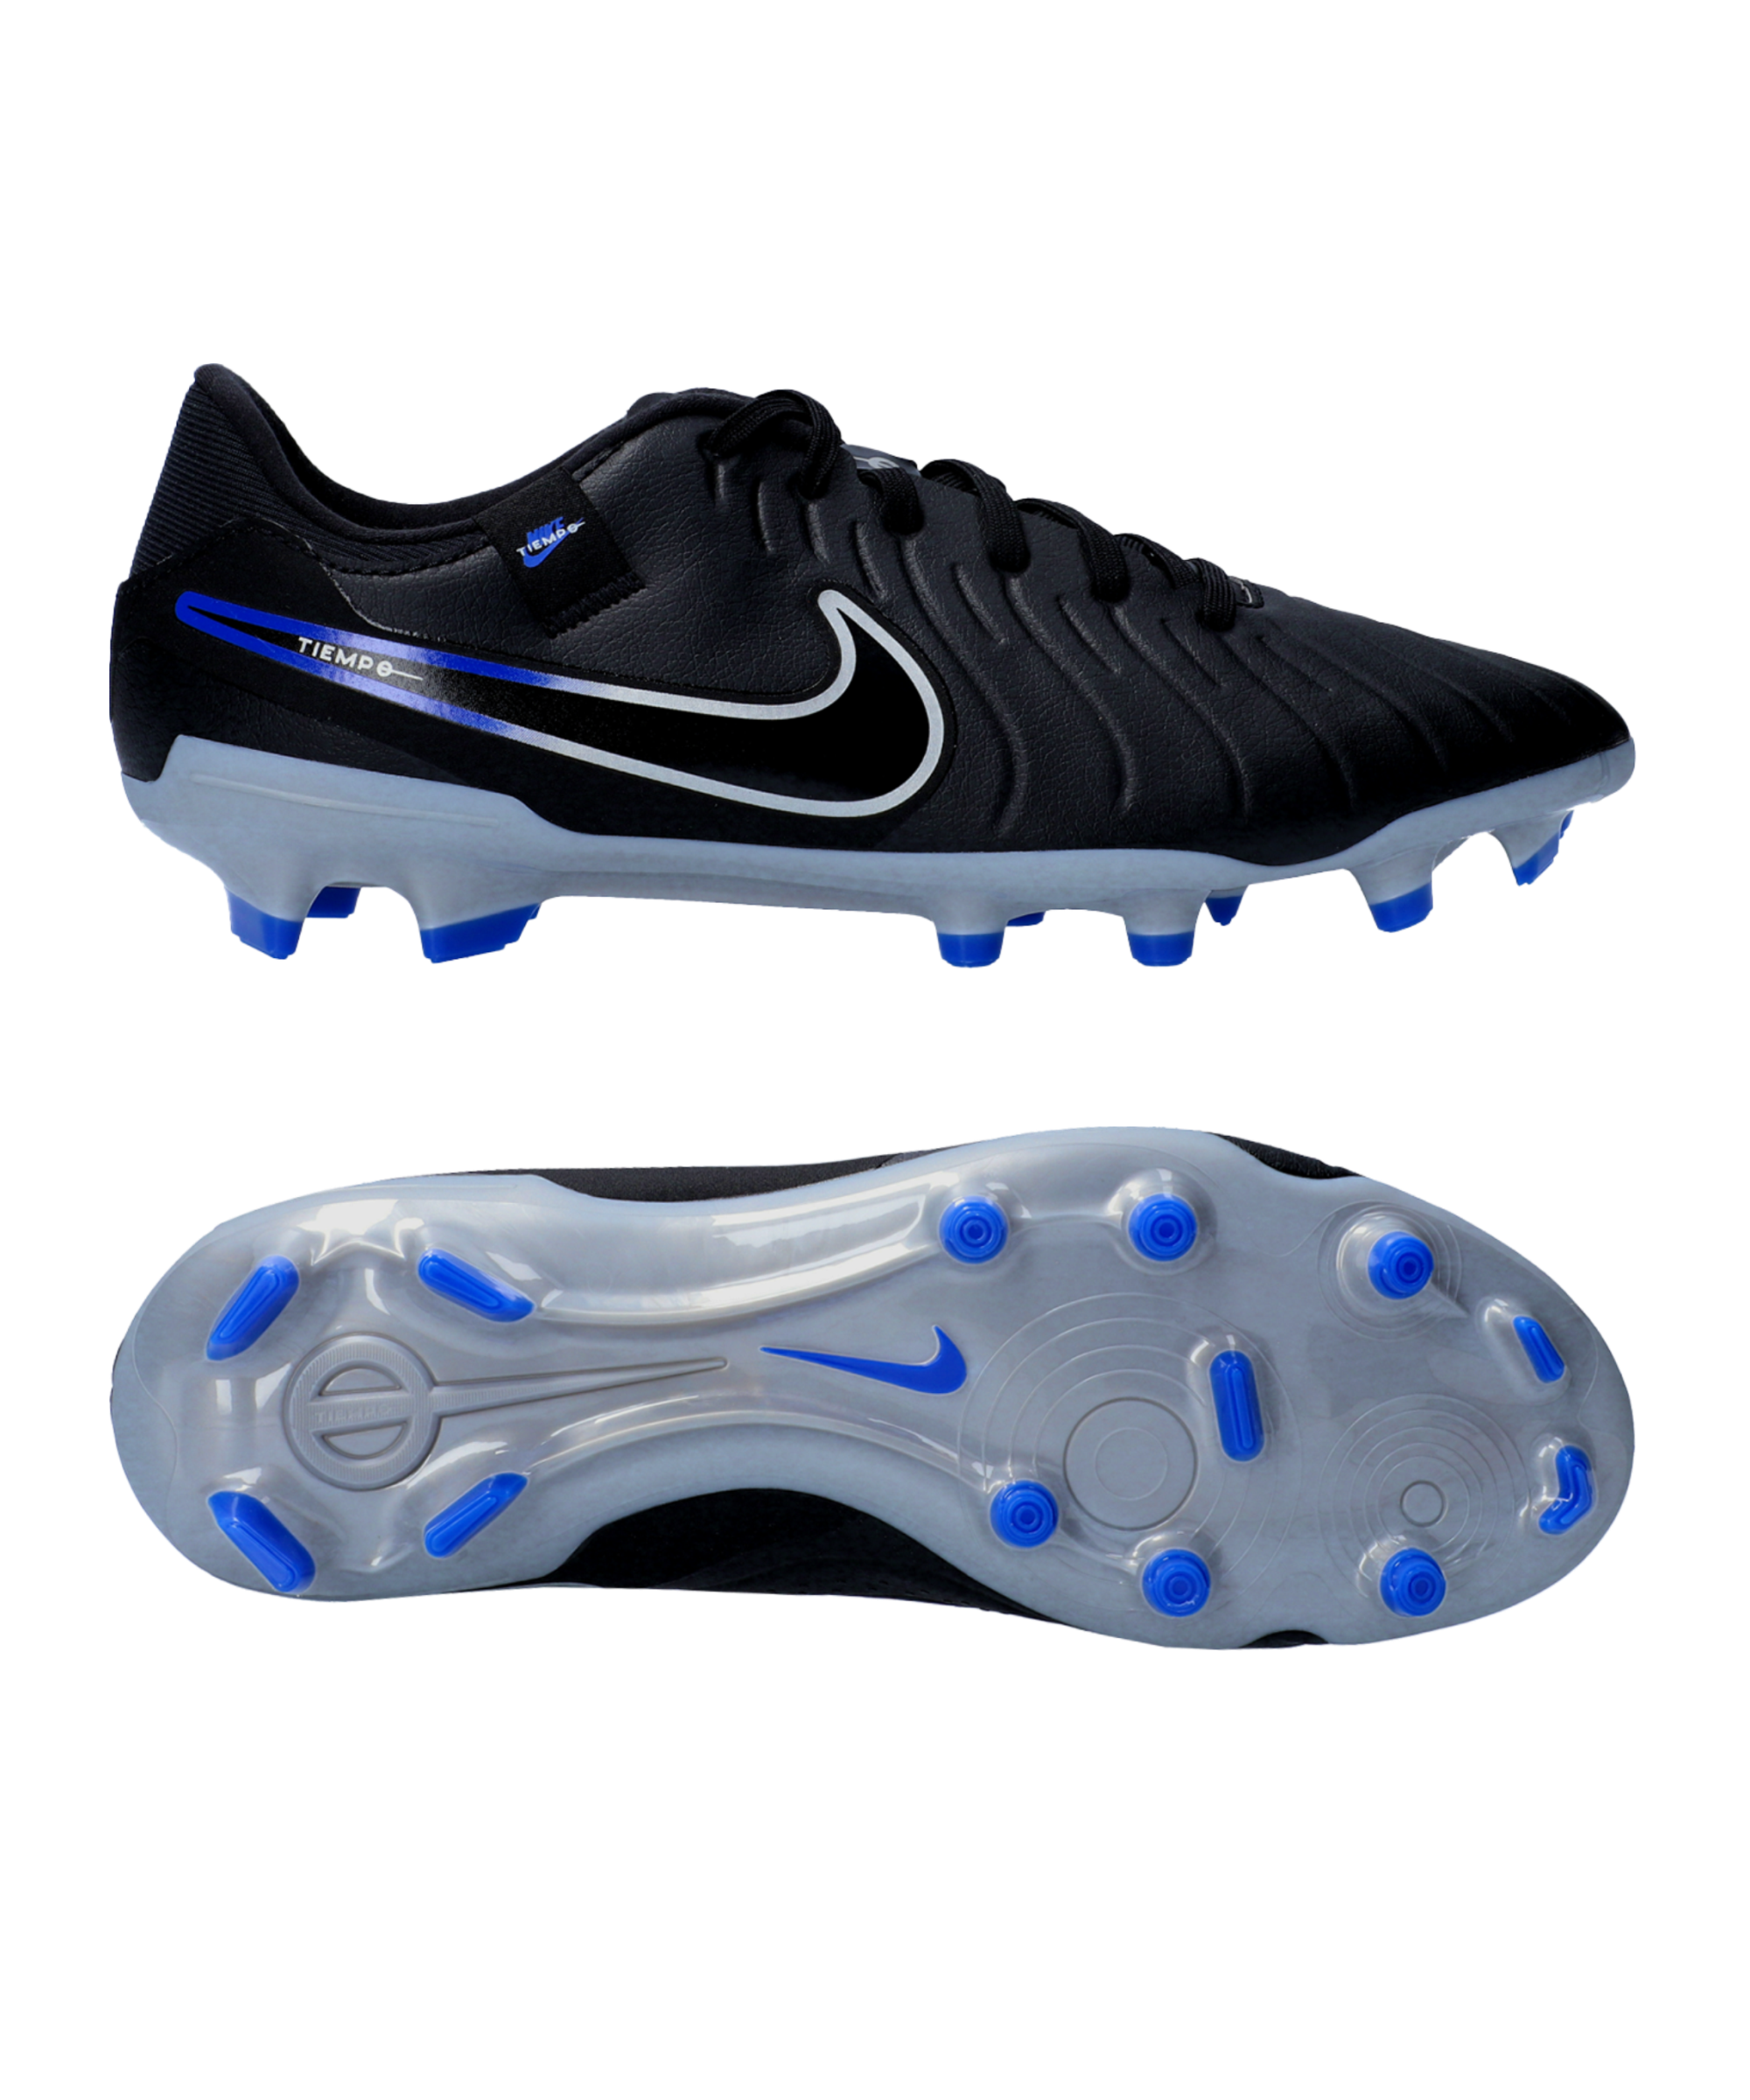 Nike Fußballschuh Tiempo Legend X Academy FG/MG Shadow schwarz silber blau